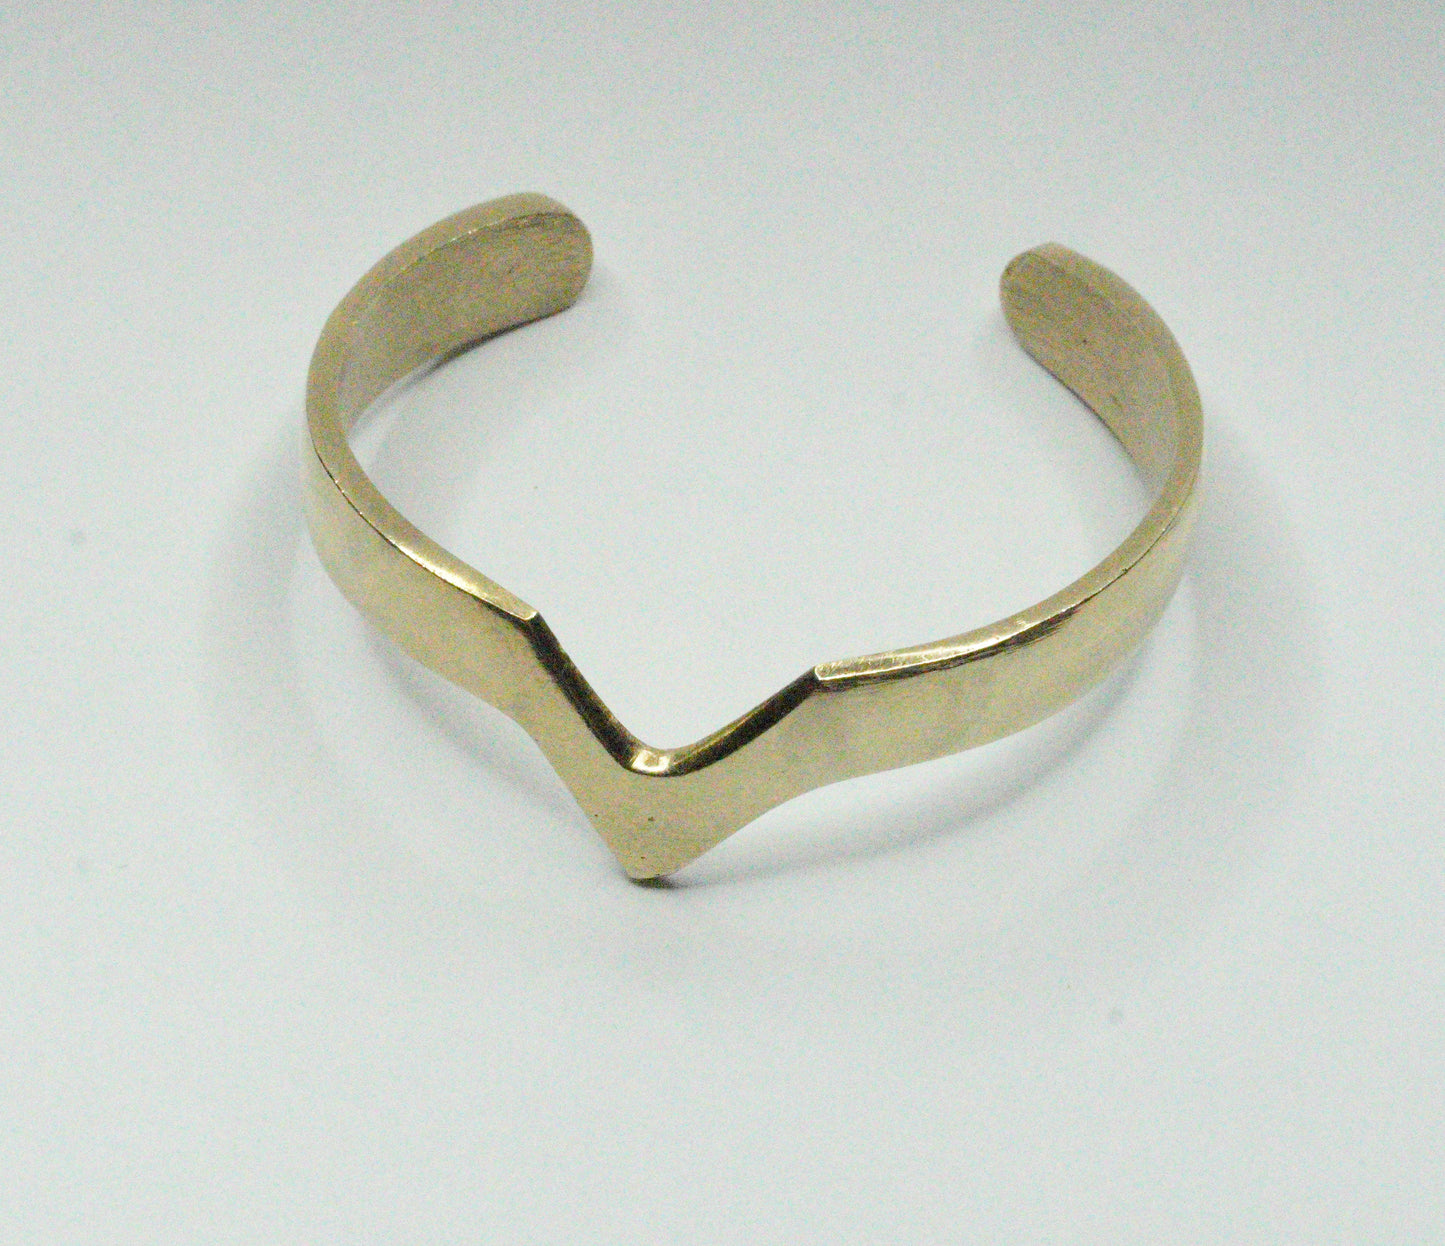 High Quality Handmade Brass Jewelry, African Brass Bracelets, Wrist Bracelet, Men Bracelet, Friendship Bracelet, Unisex